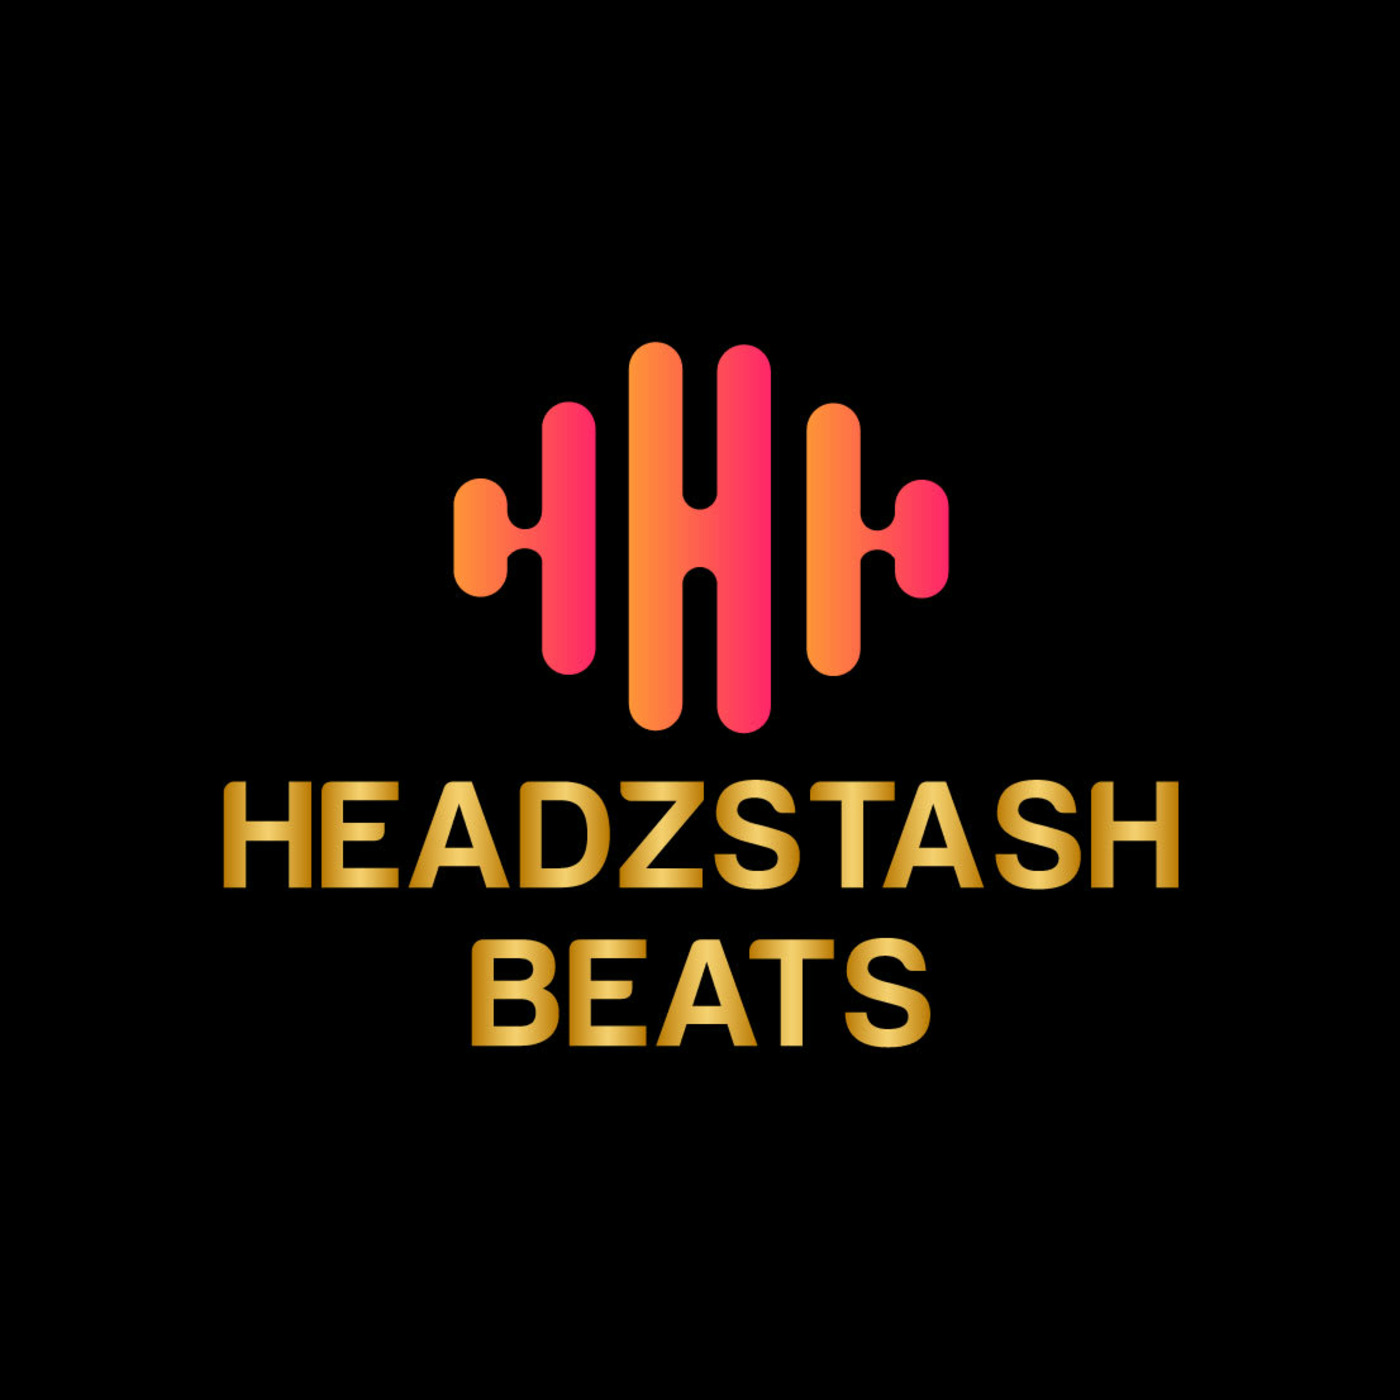 HEADZSTASH BEATS - THE PLUG